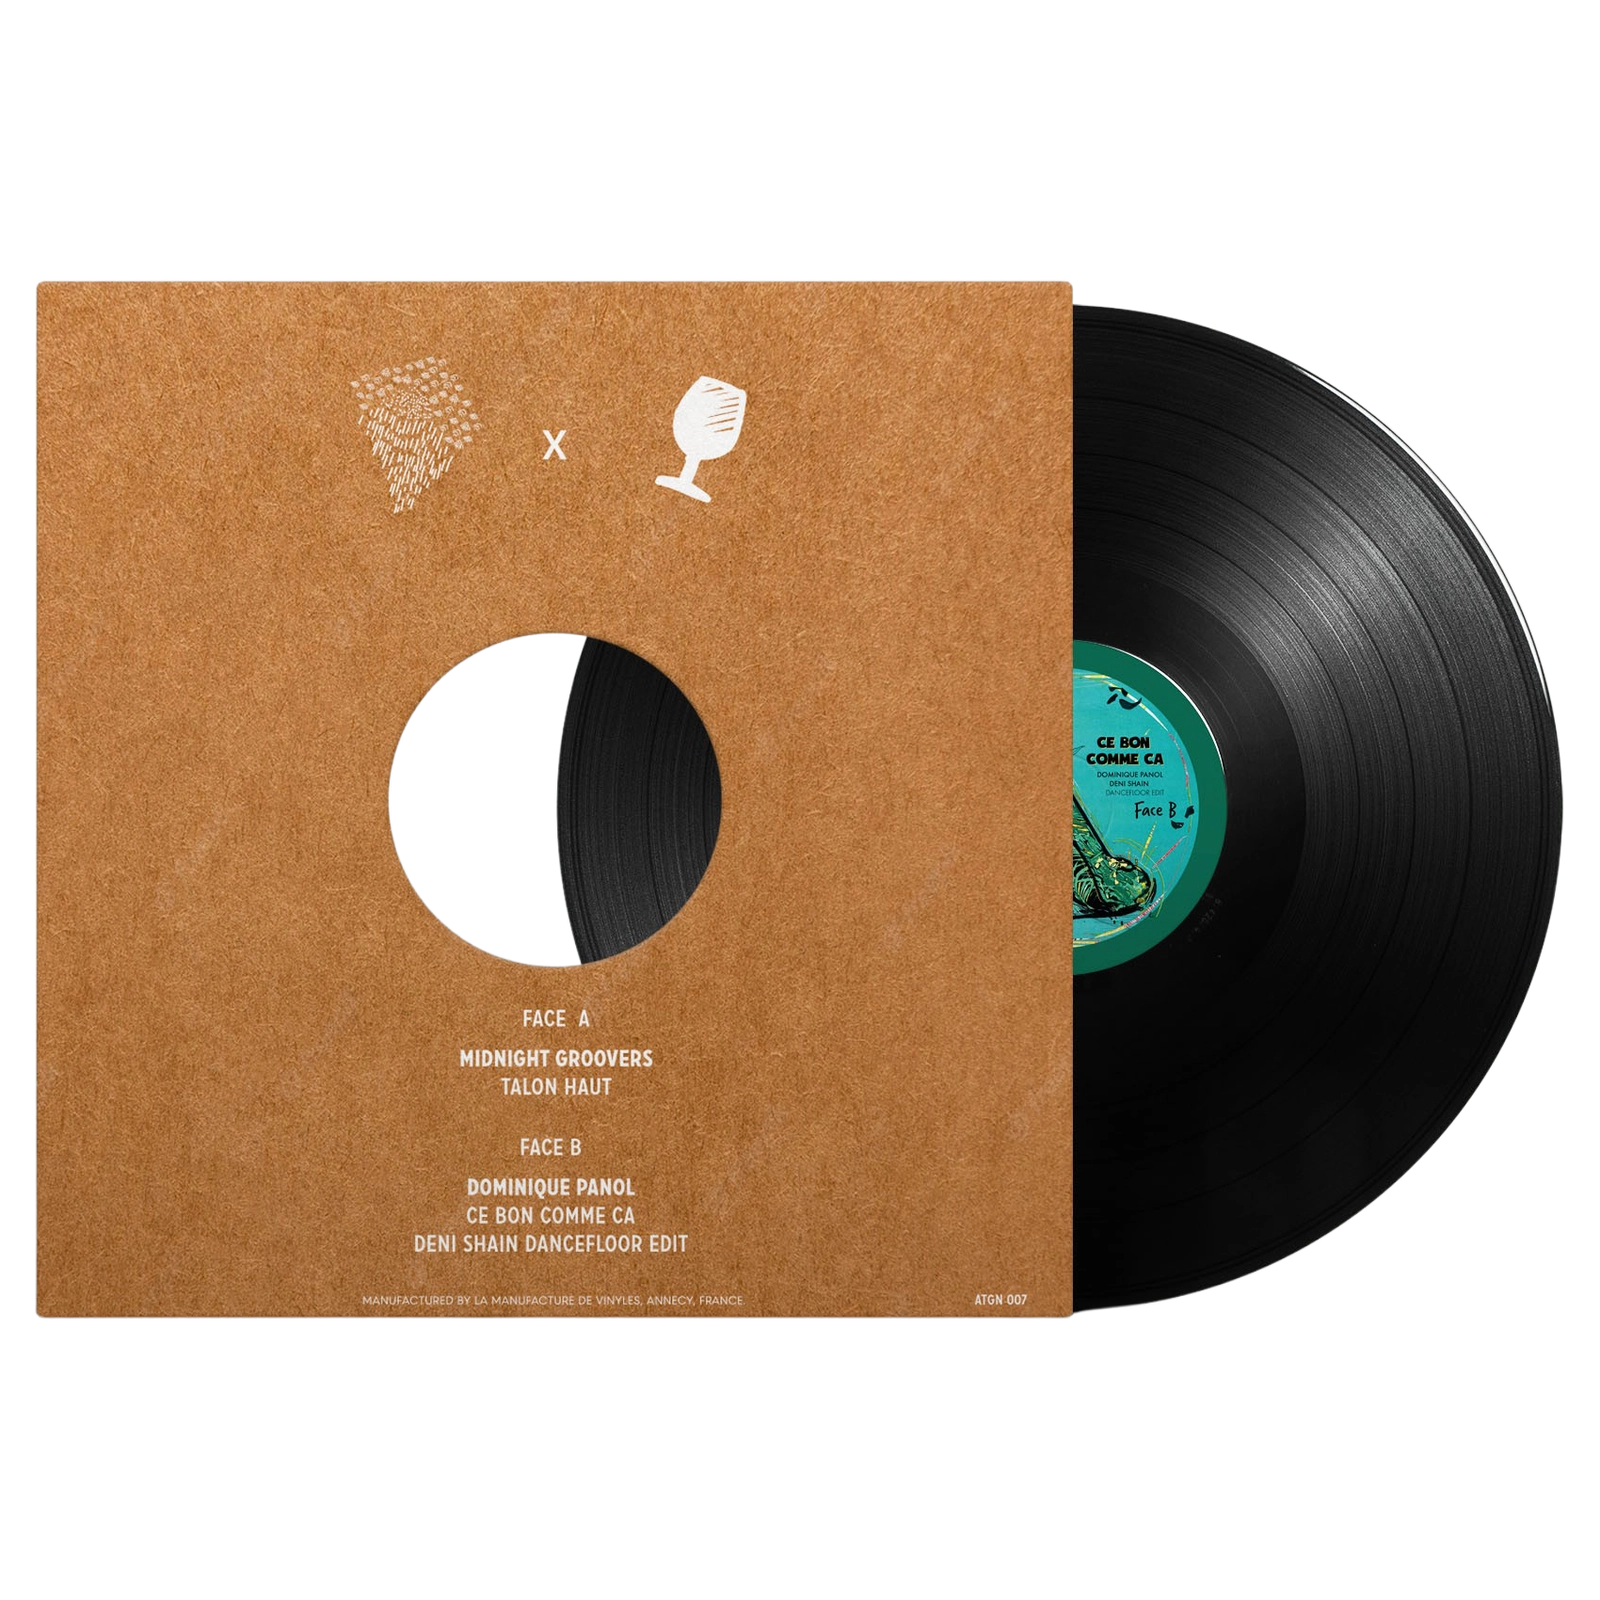 Le Verre Vole Atangana Records Limited Edition 12 Vinyl Black-0